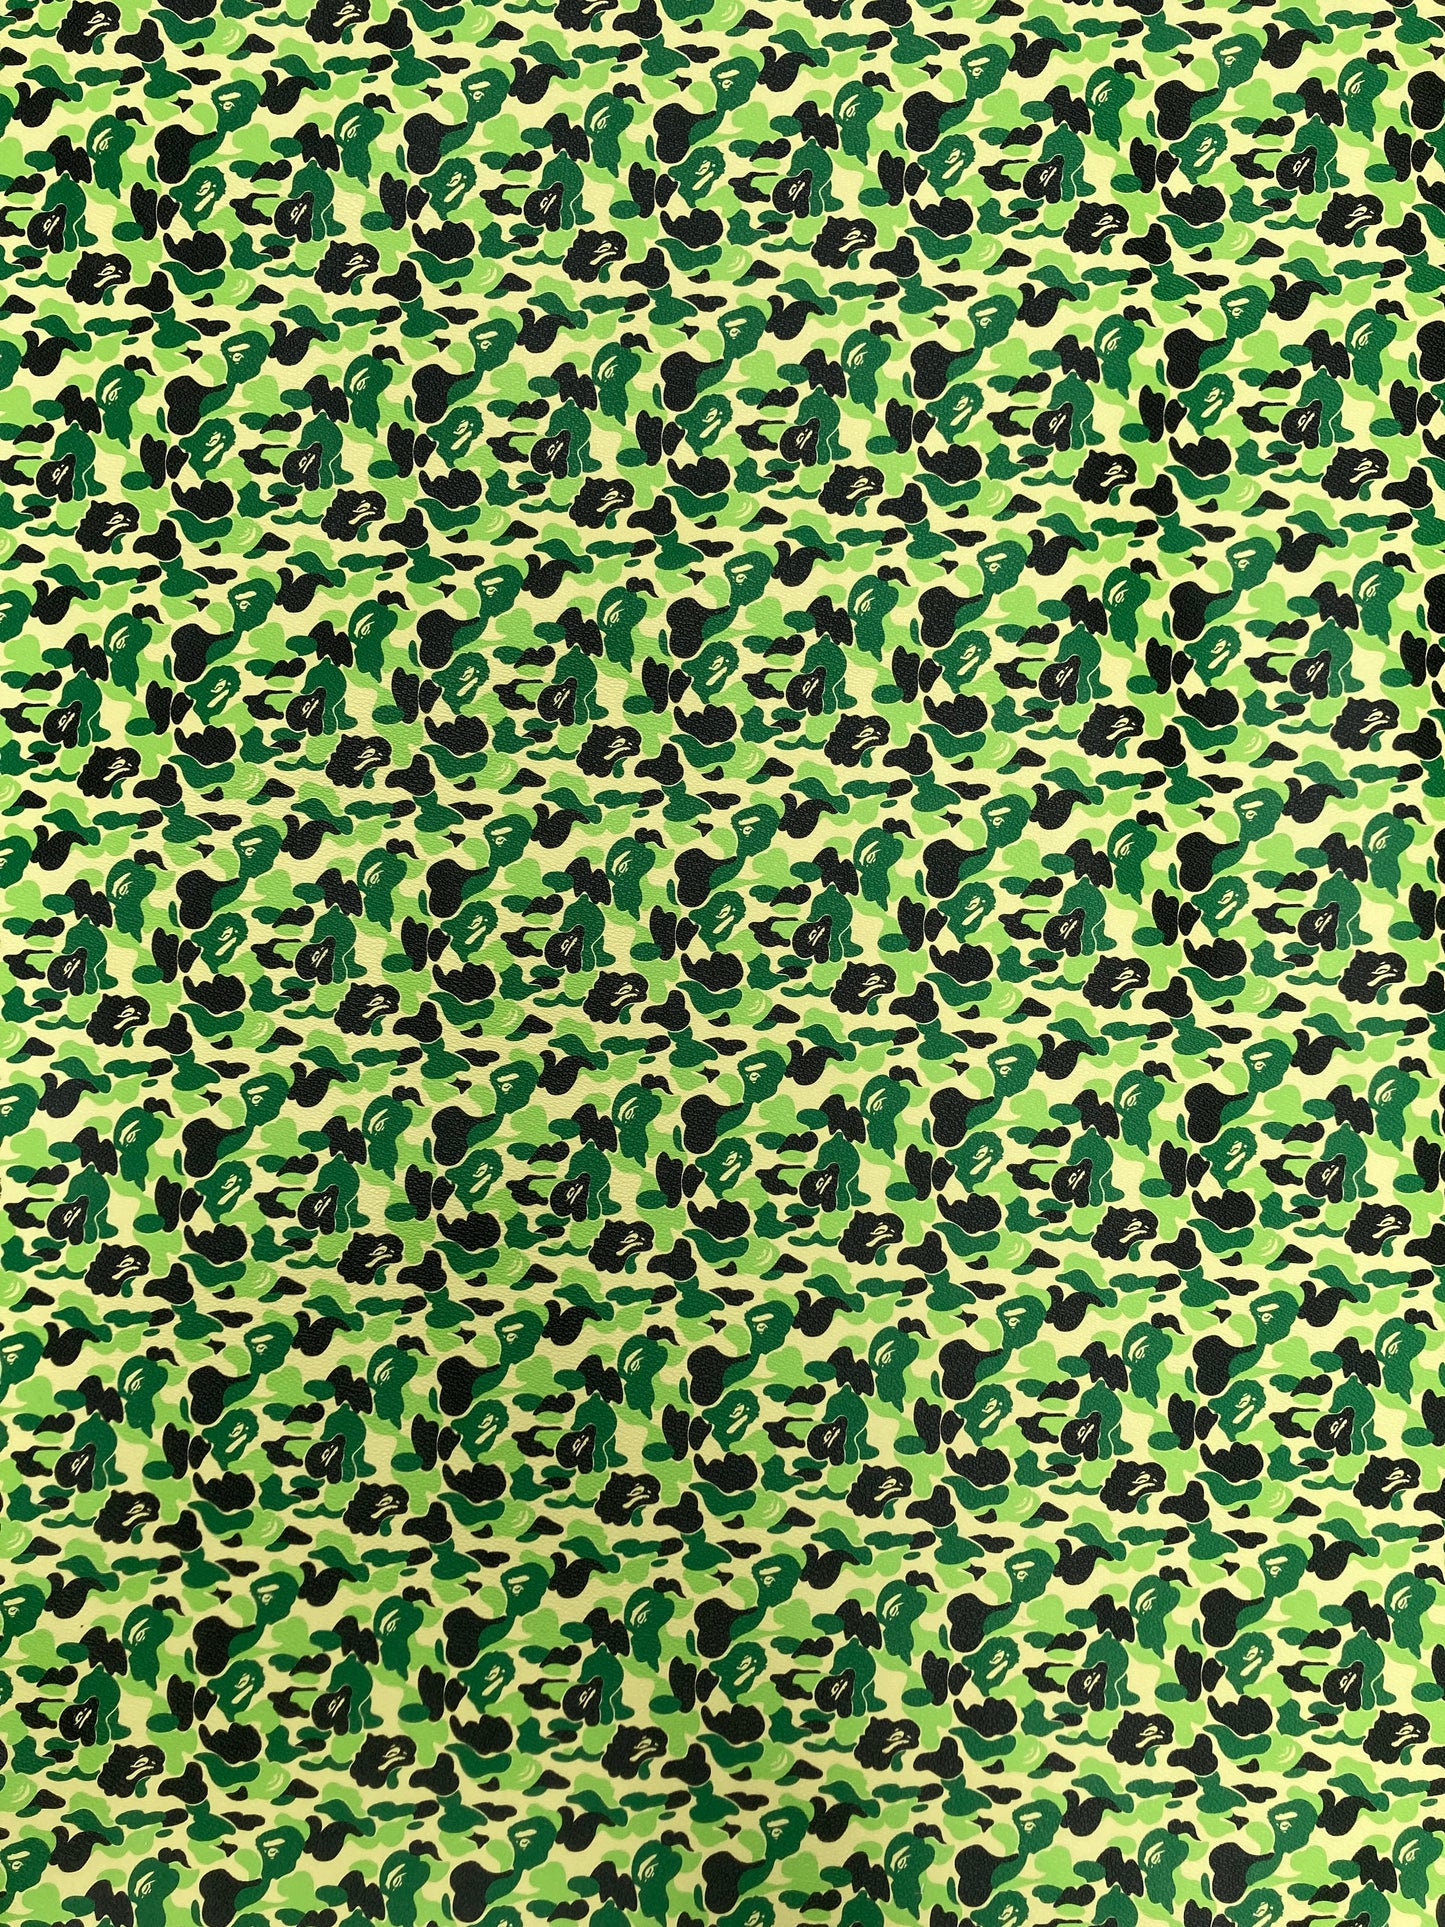 Custom Sneakers Green Bape Vinyl for Handmade Crafting